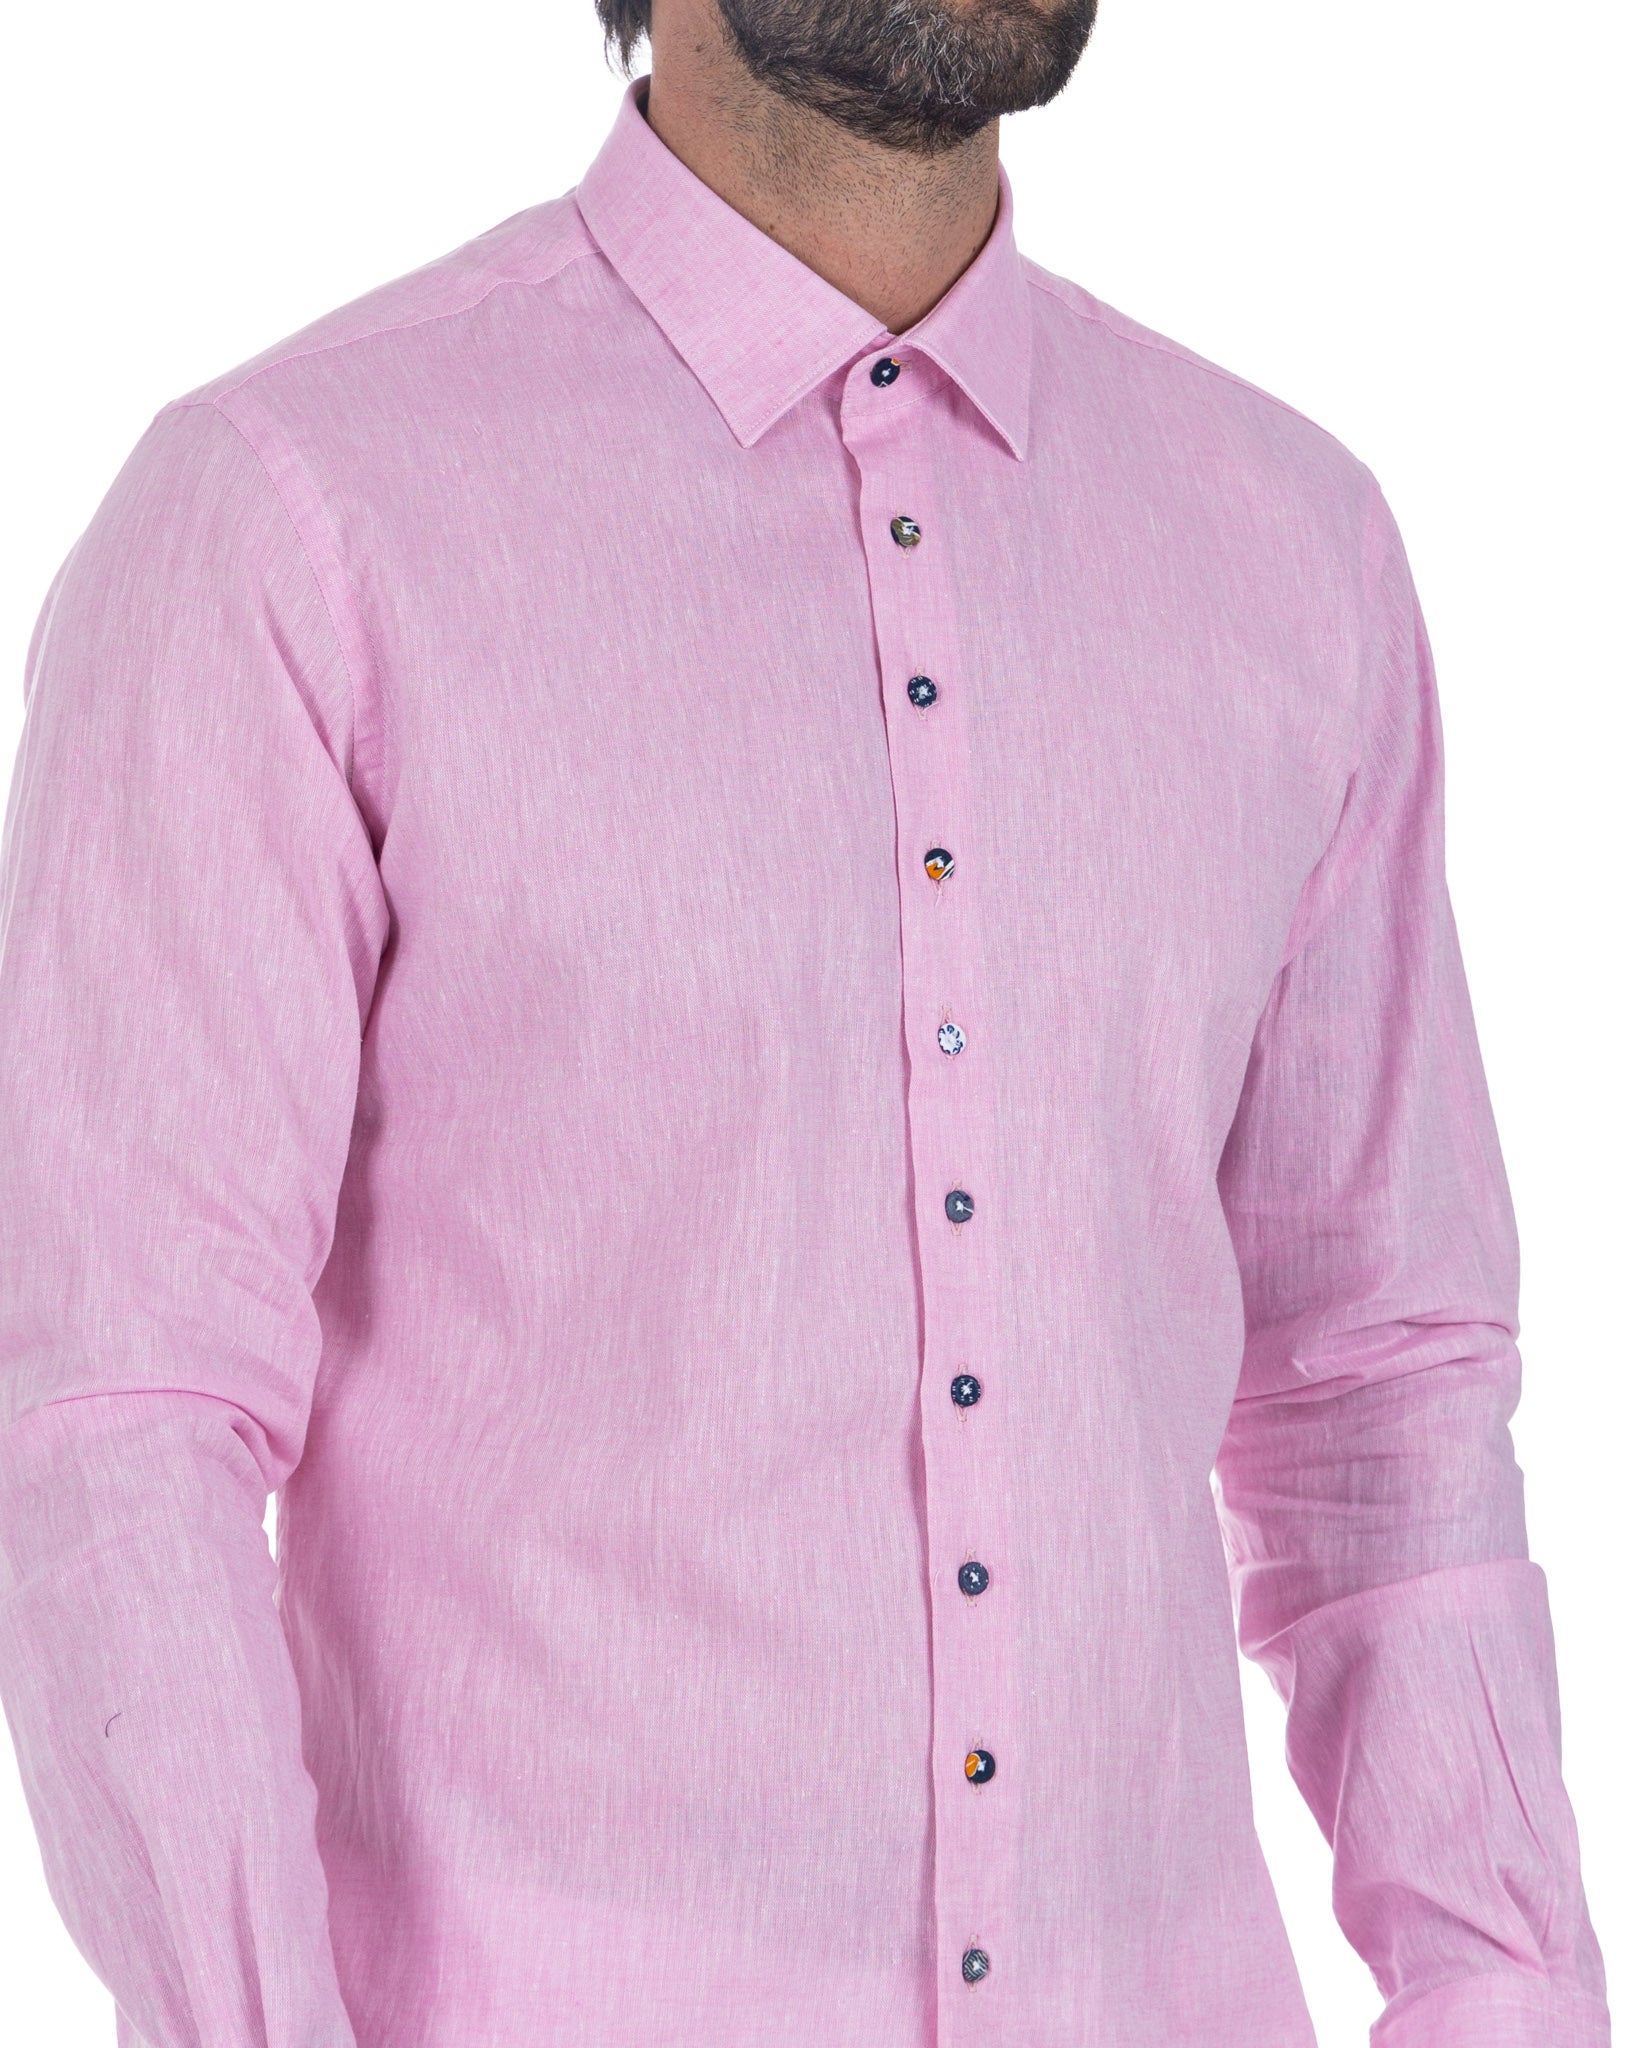 Praiano - pink linen French shirt